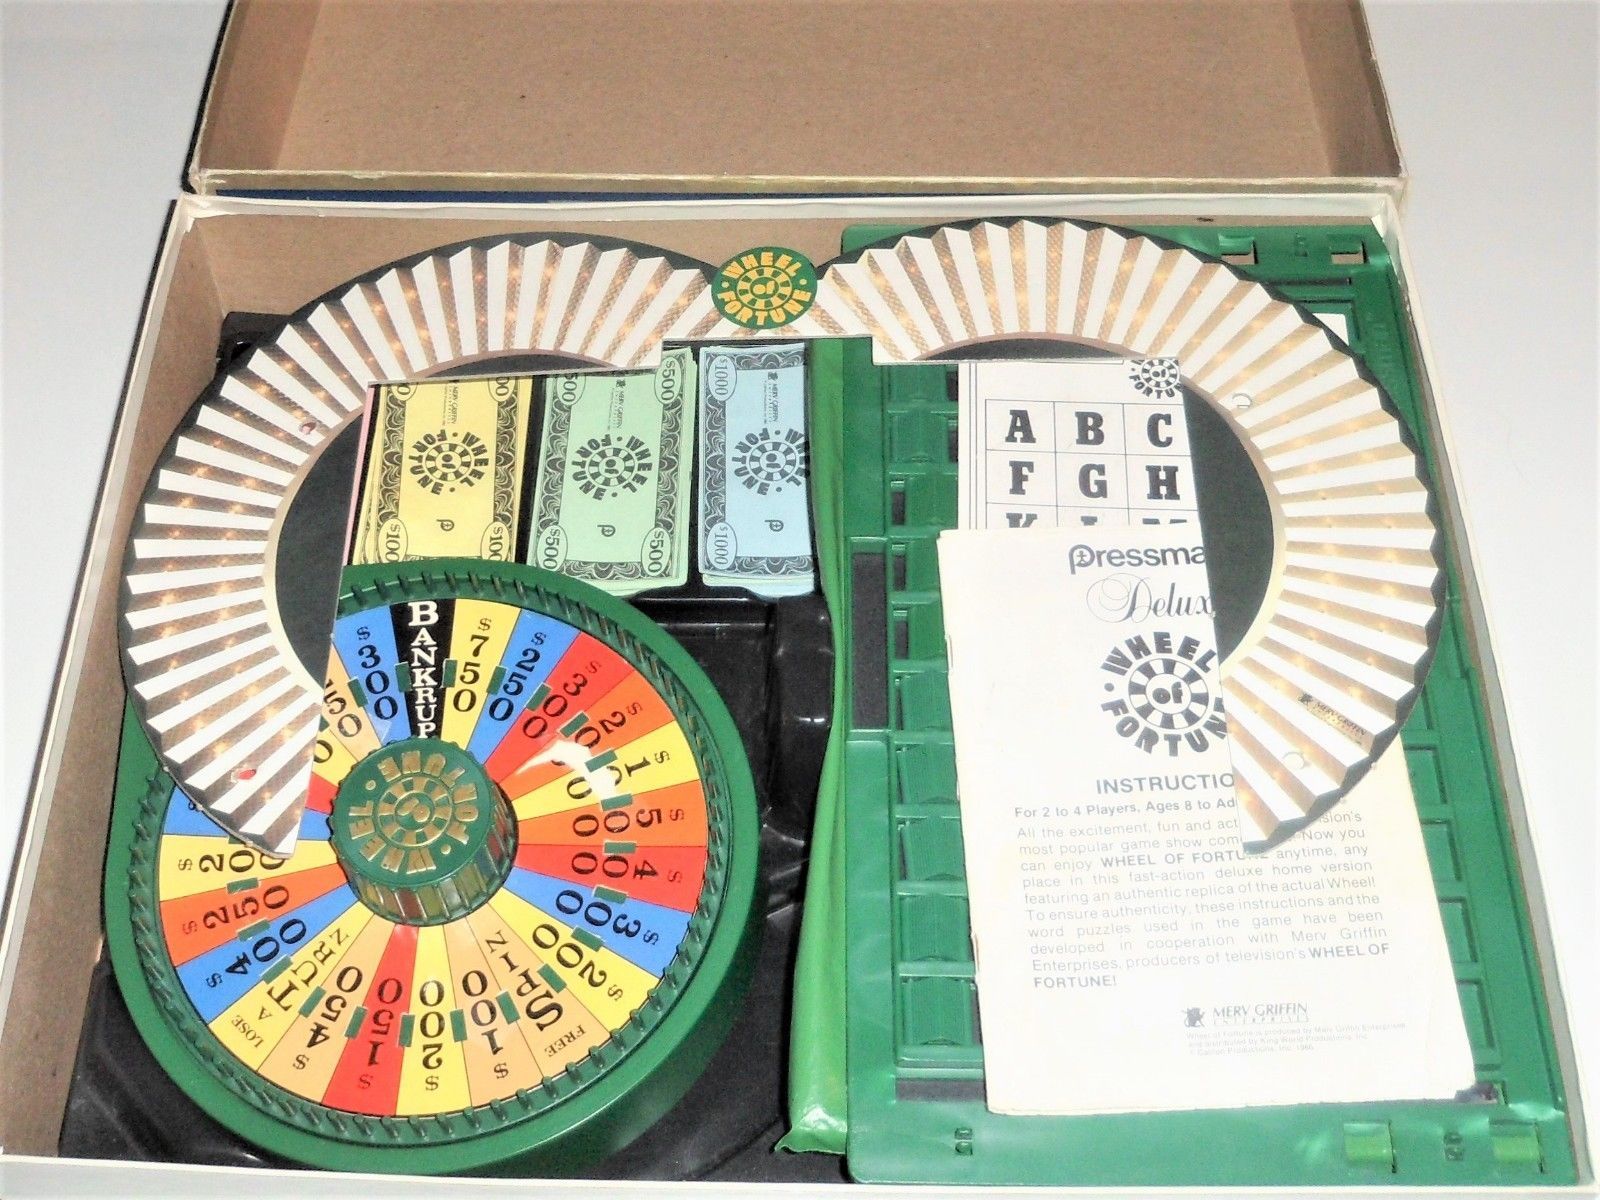 wheel of fortune board game box